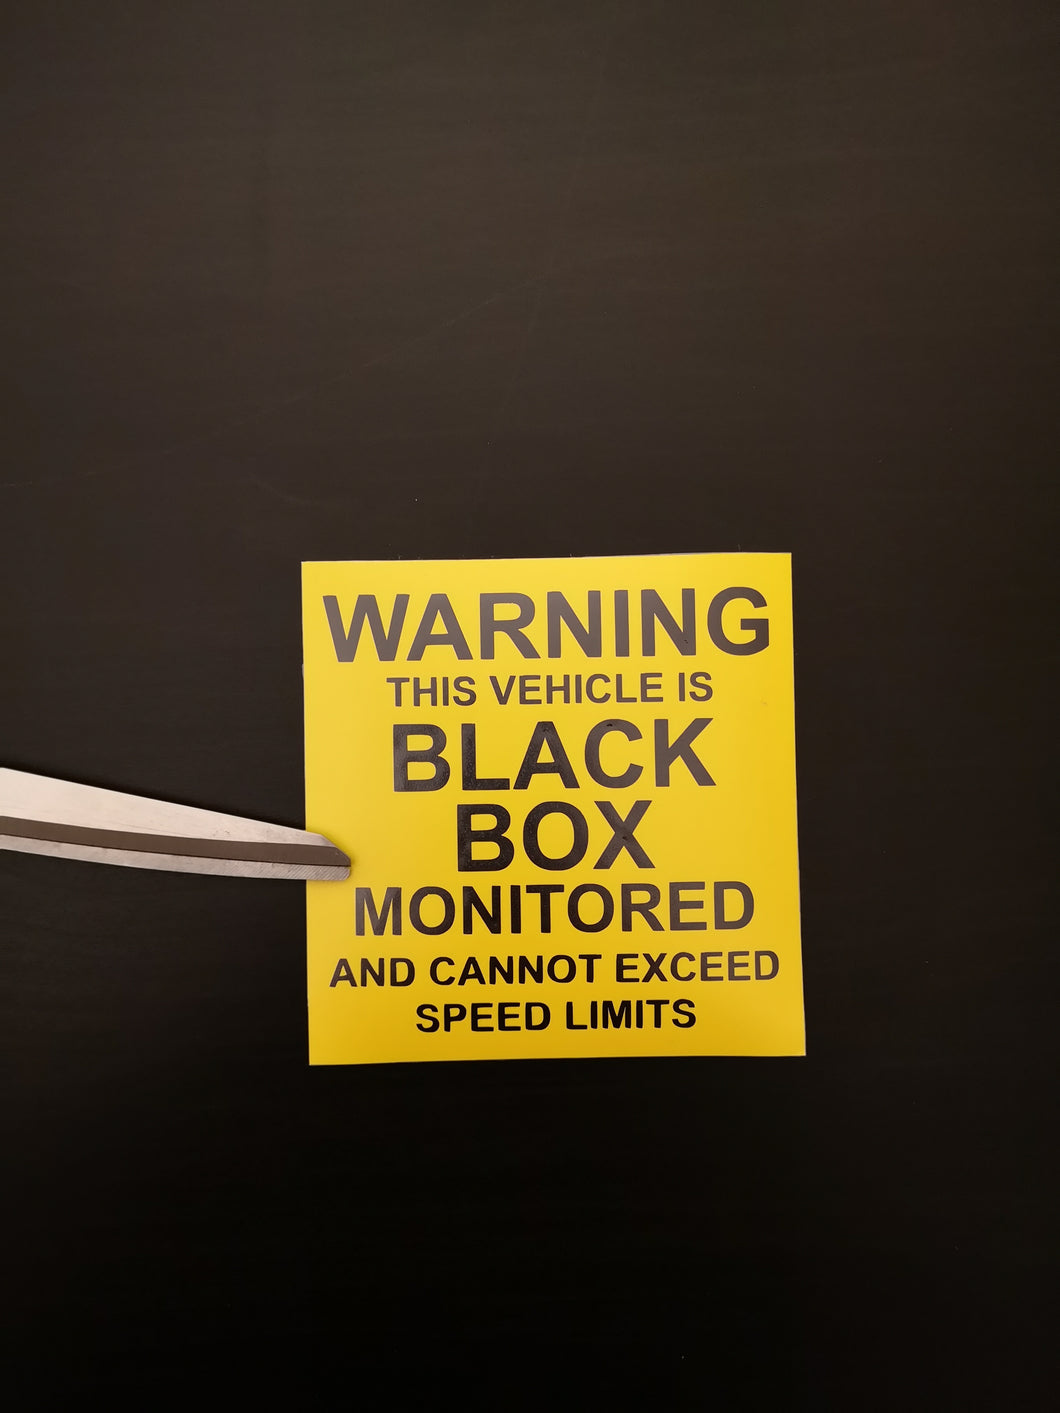 Black box monitored